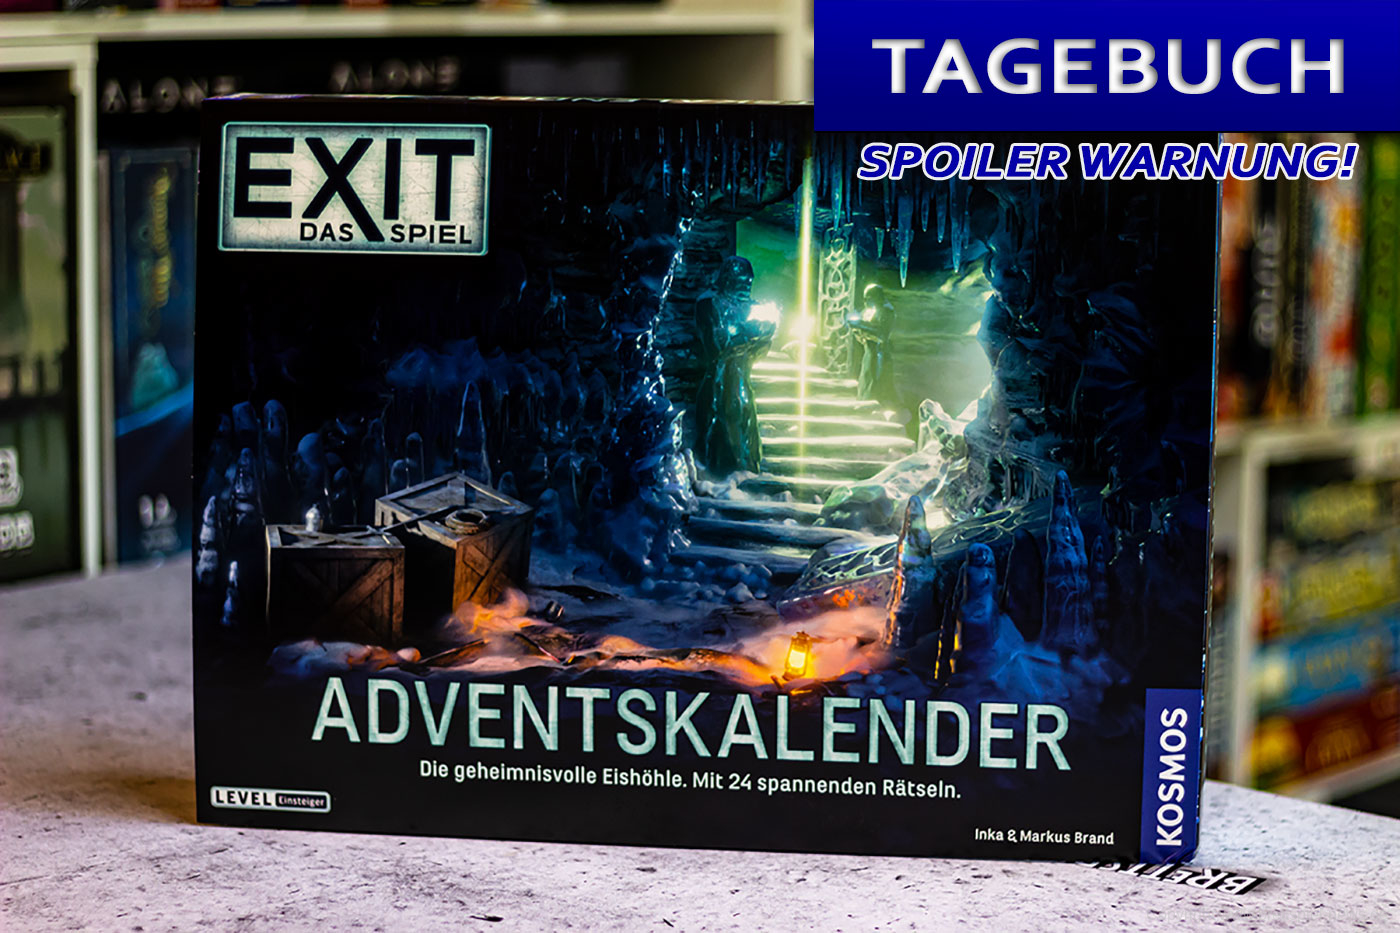 EXIT ADVENTSKALENDER // Tagebuch 2020